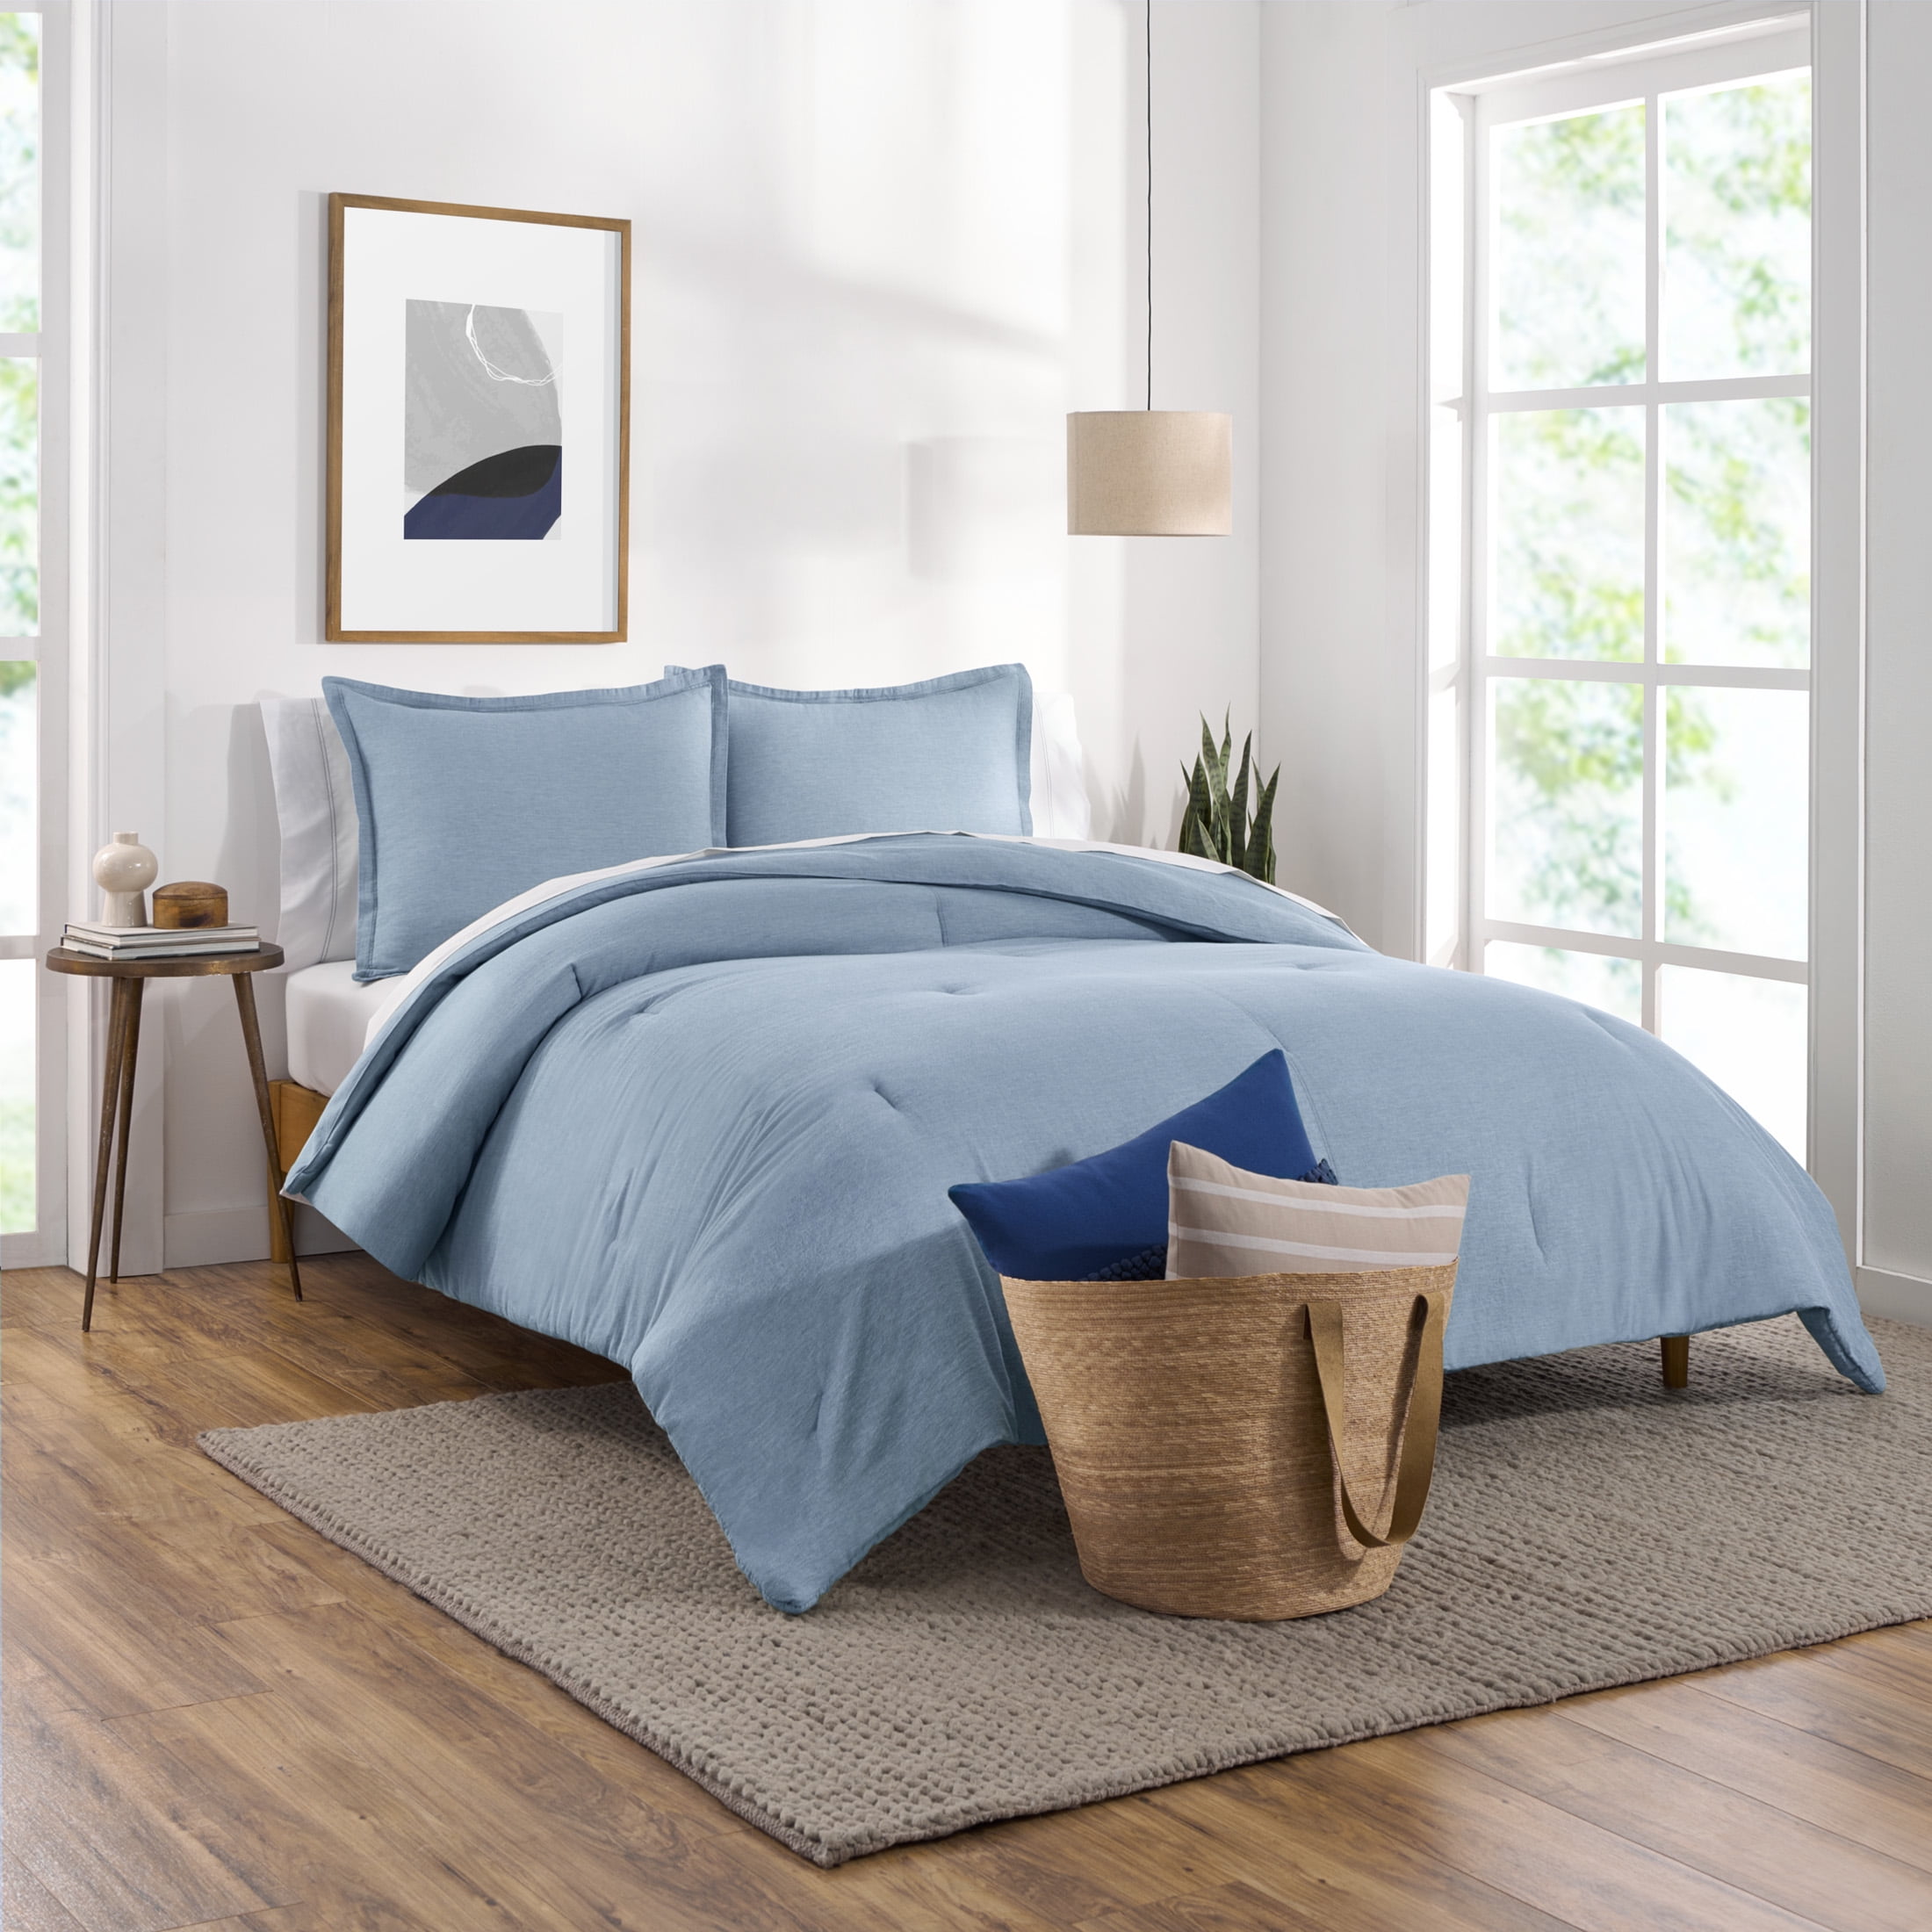 Basics Ultra-Soft Light-Weight Microfiber Reversible Comforter Bedding Set Full/Queen Blue Denim/Beige Stripes 